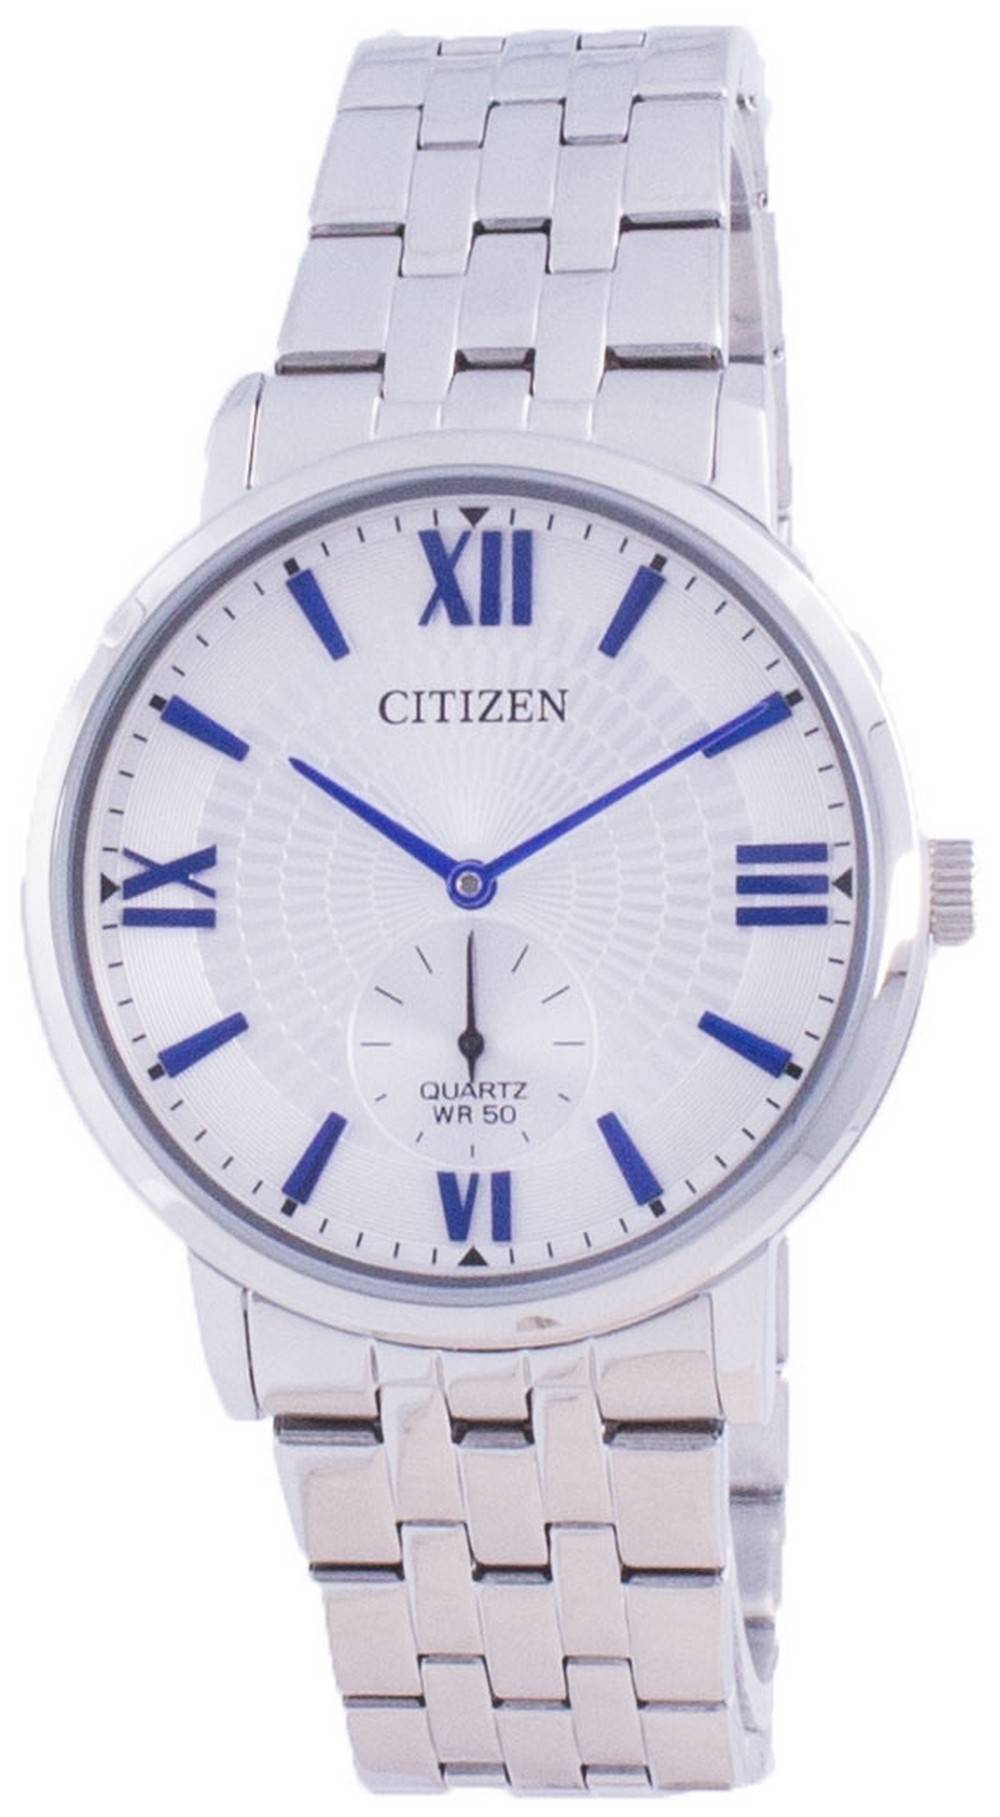 Citizen Quartz Silver Dial Be9170-72a Men's Watch